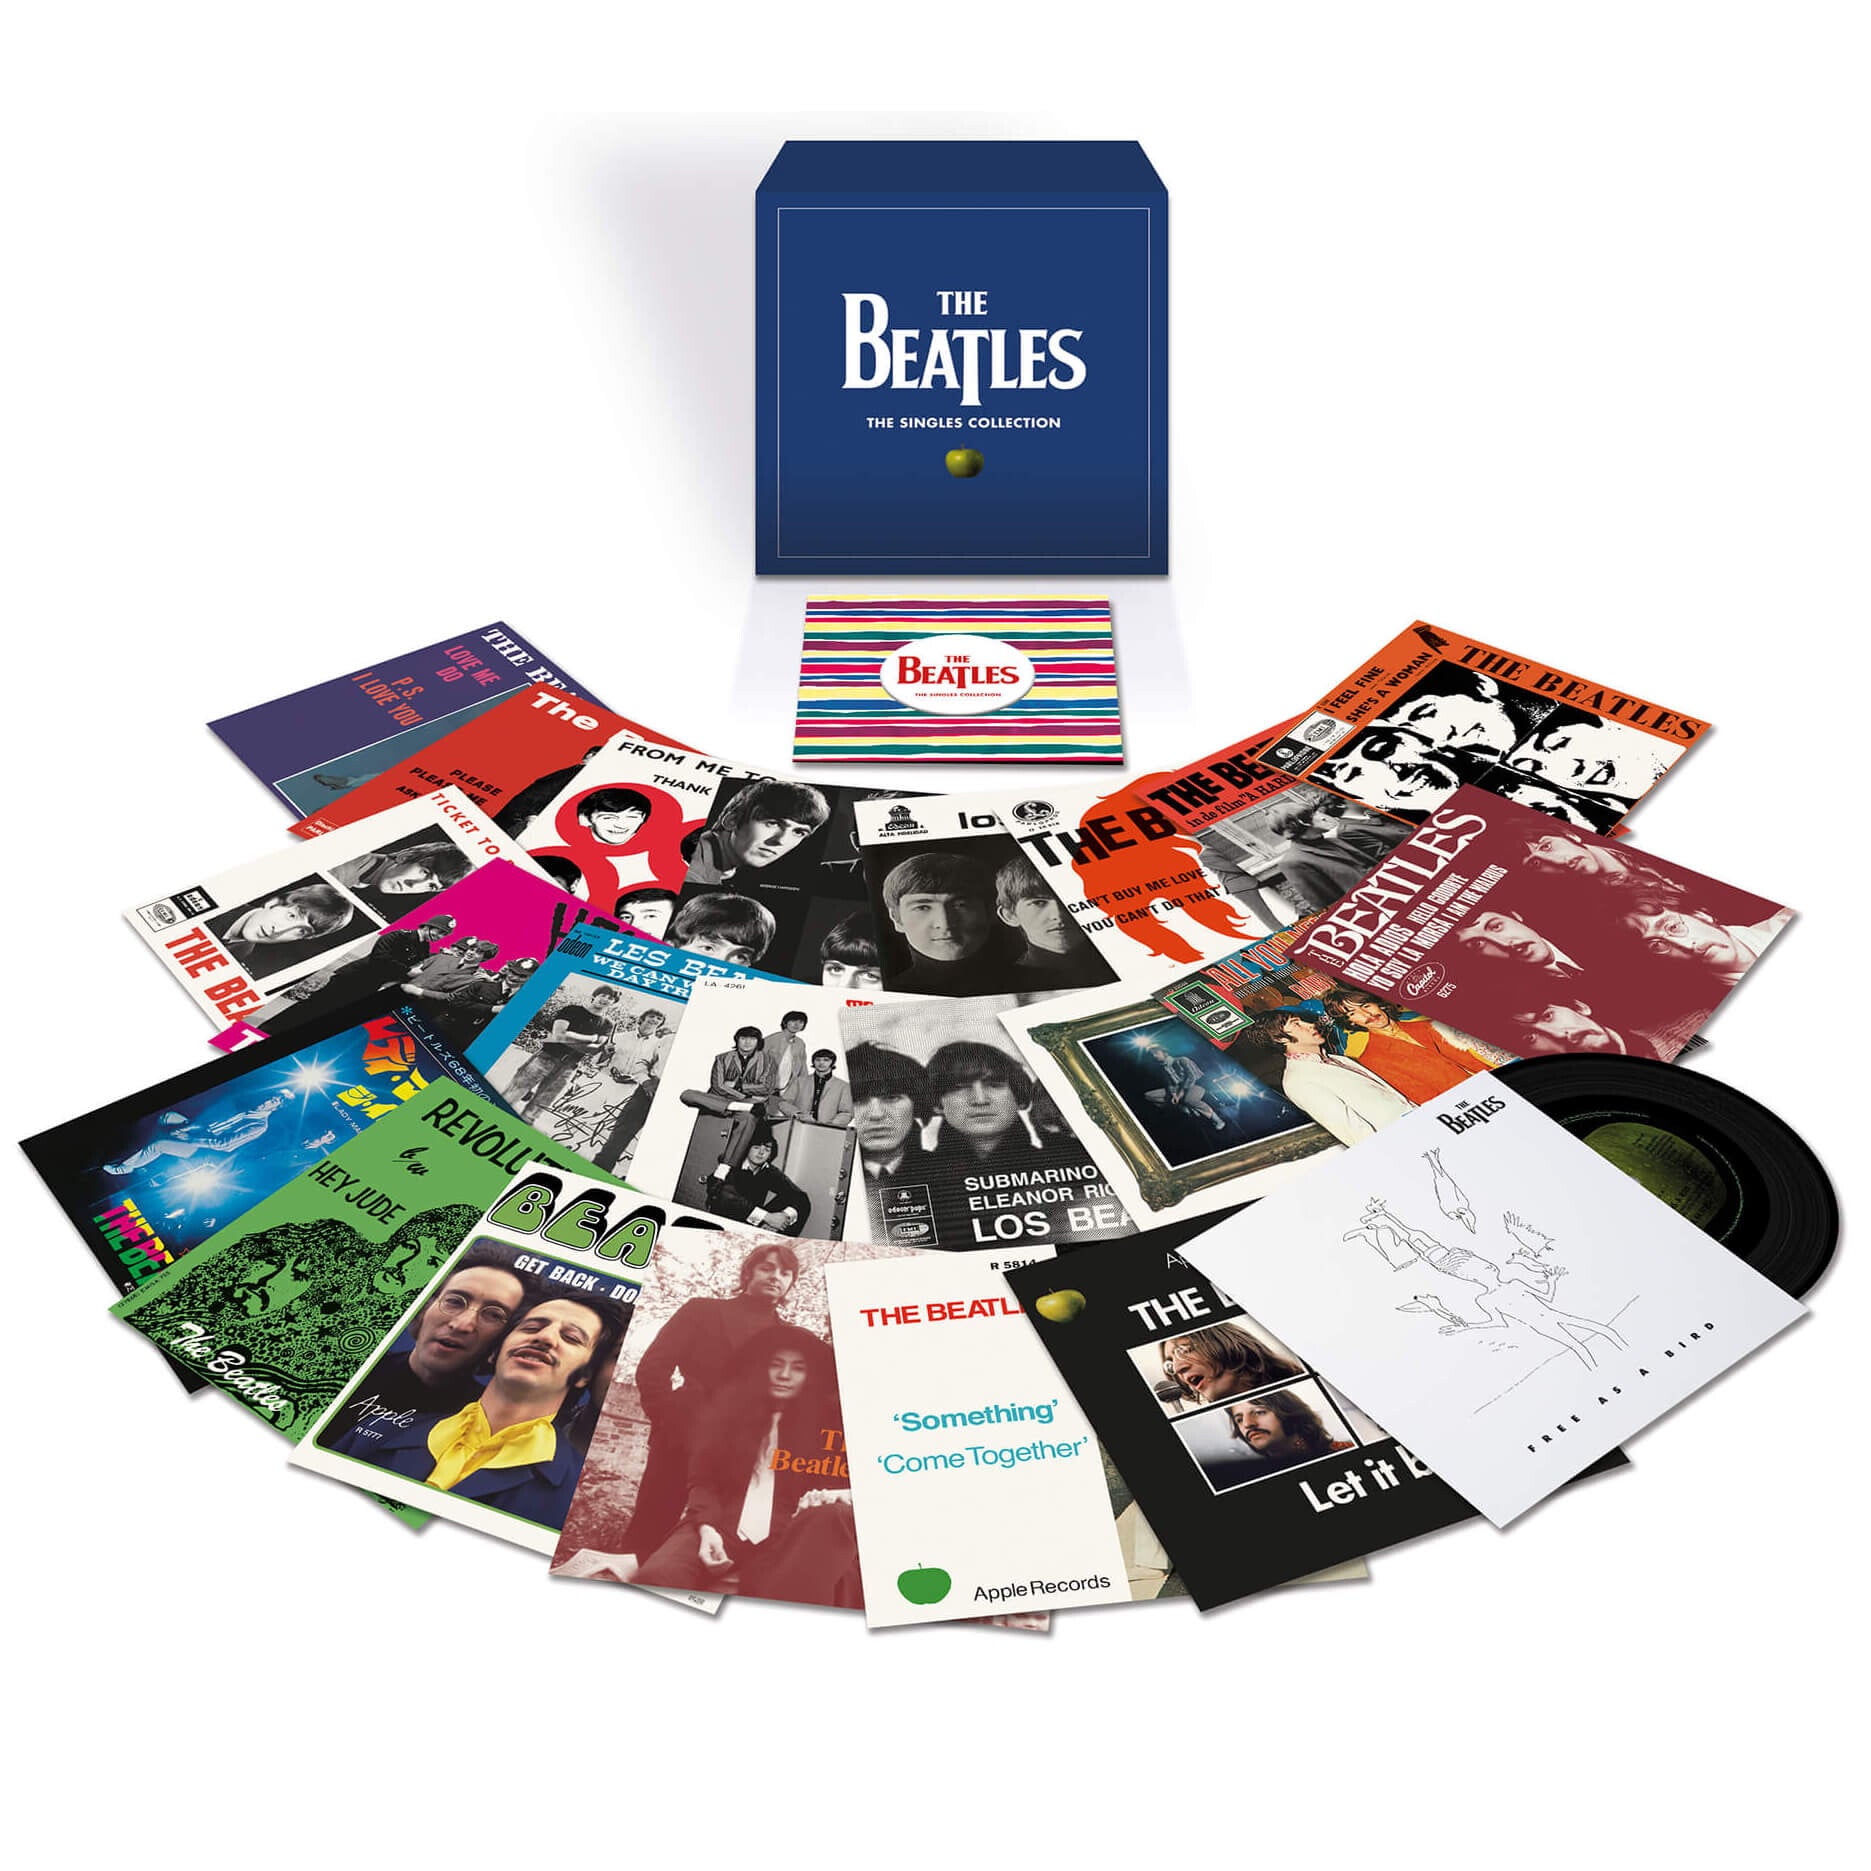 https://images.bravado.de/prod/product-assets/product-asset-data/beatles-the/the-beatles-international-1/products/131348/web/293085/image-thumb__293085__3000x3000_original/The-Beatles-The-Singles-Collection-Ltd-7-Vinyl-Boxset-Boxsets-131348-293085.jpg